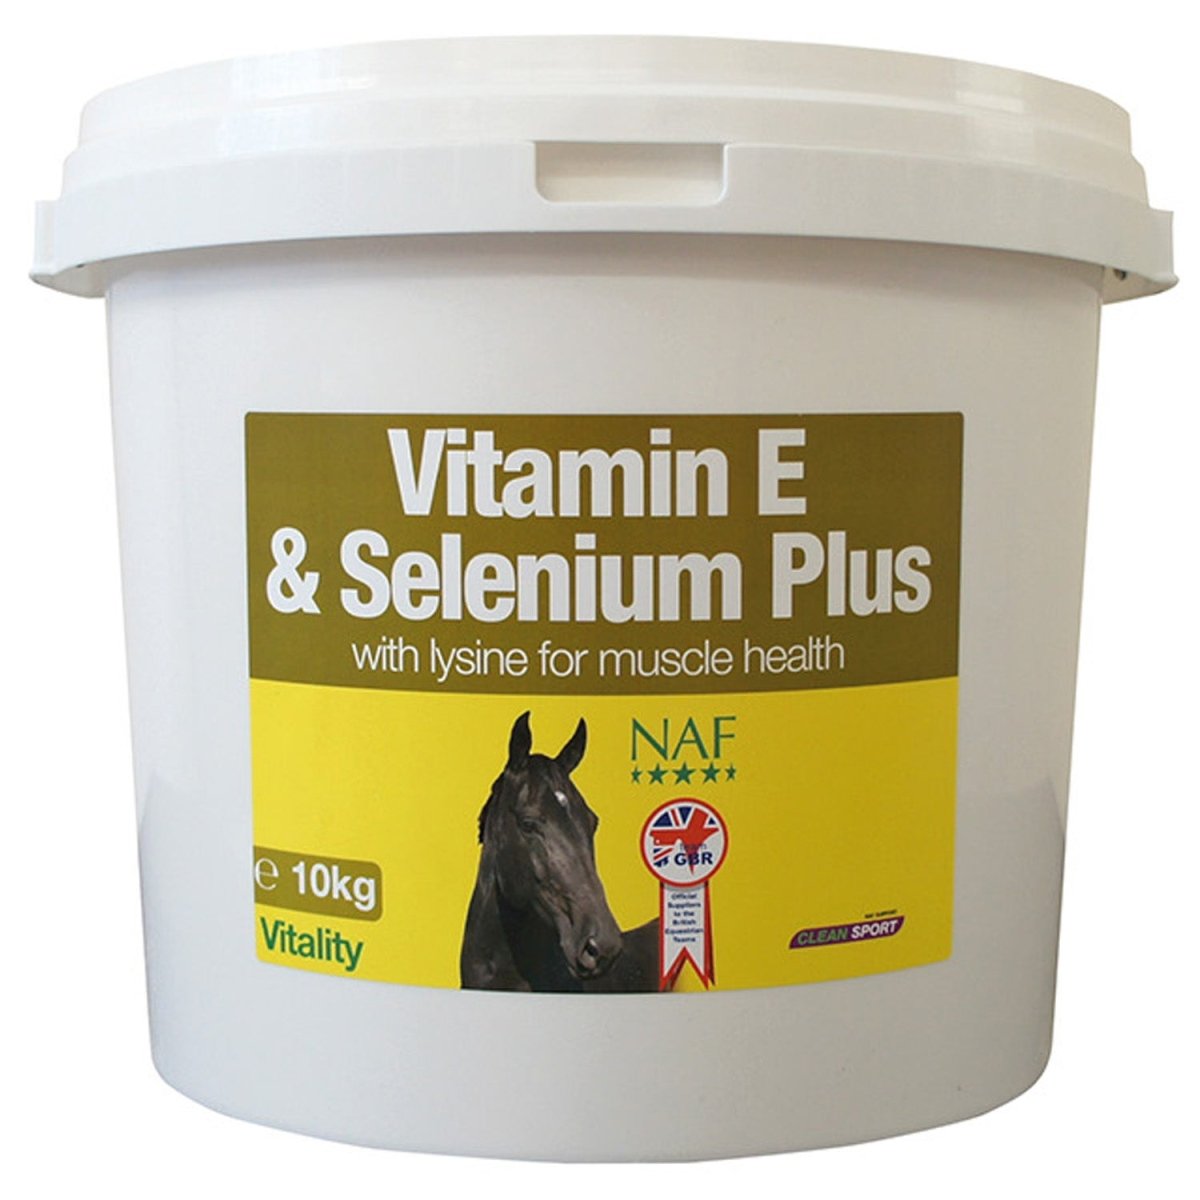 Naf Vitamin E & Selenium Plus - 10Kg -